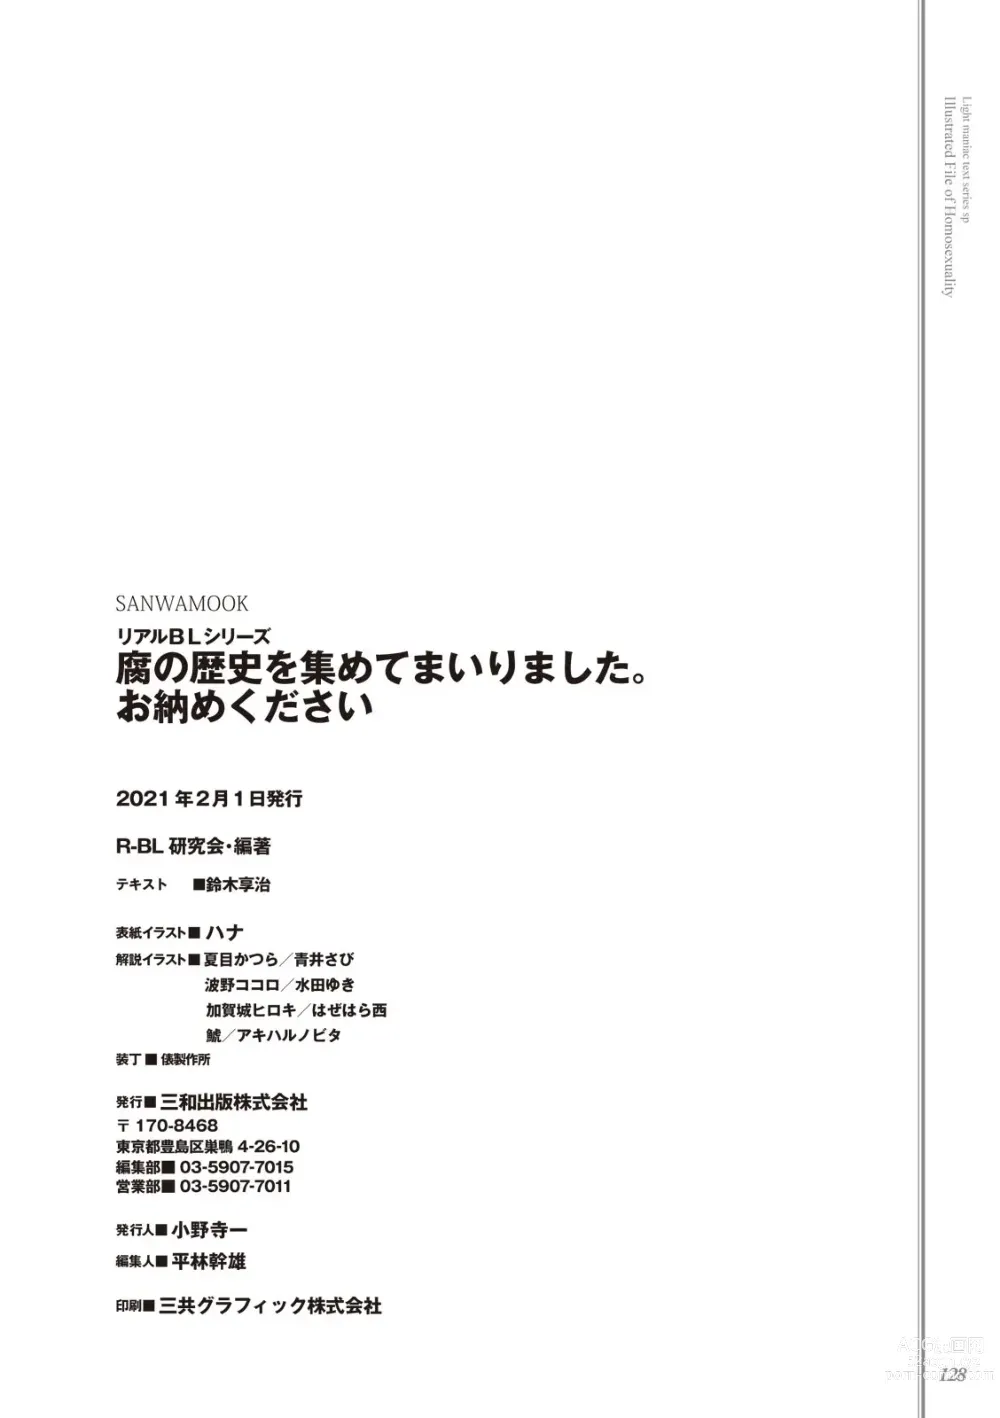 Page 130 of manga Kusa no Rekishi o Atsumete Mairimashita.  Oosame Kudasai - Light maniac text series sp Illustrated File of Homosexuality